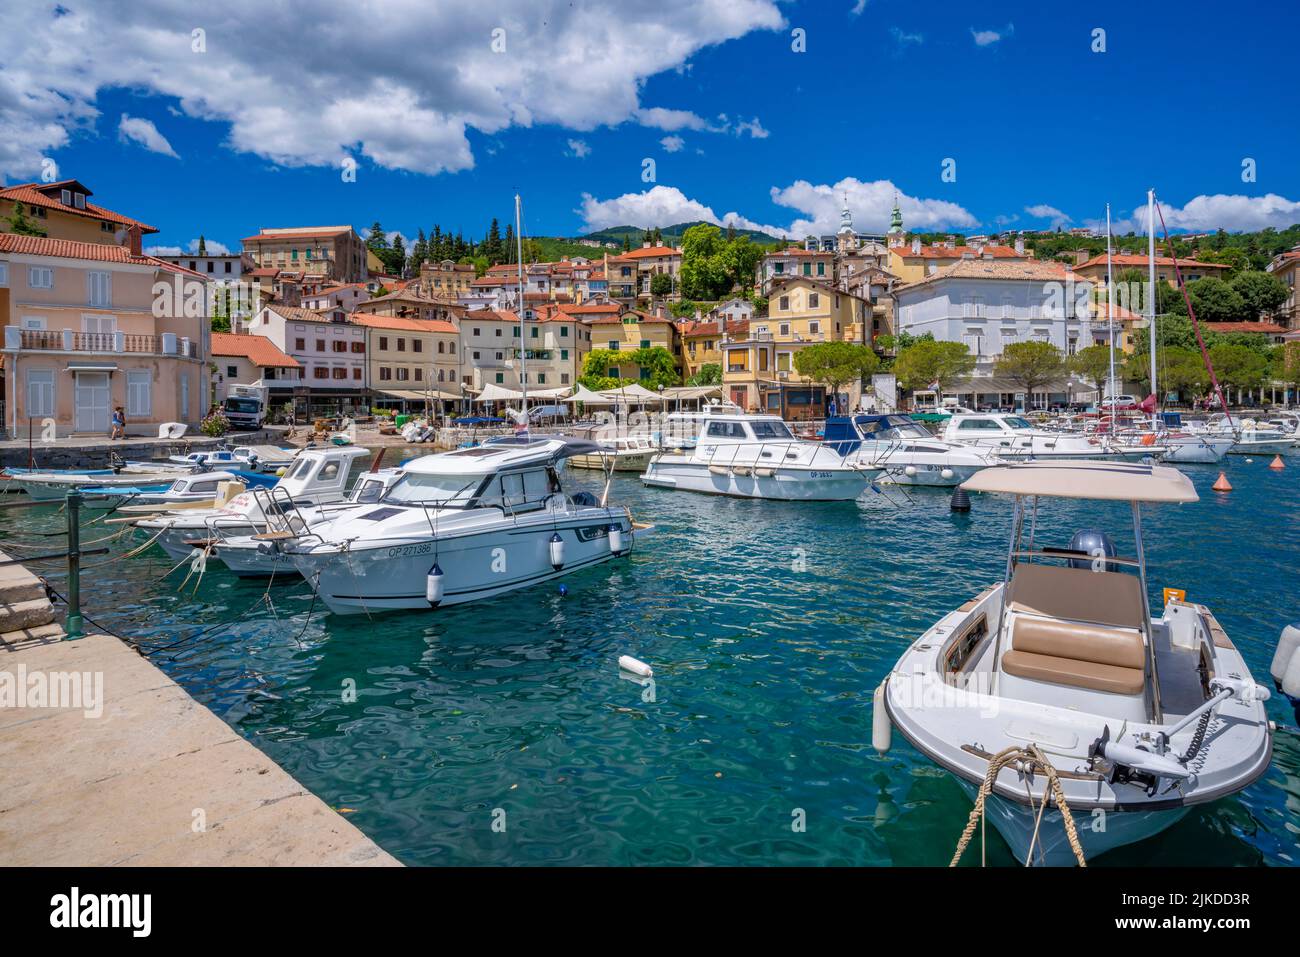 View of hotels and church overlooking marina at Volosko, Eastern Istria, Kvarner Bay, Eastern Istria, Croatia, Europe Stock Photo